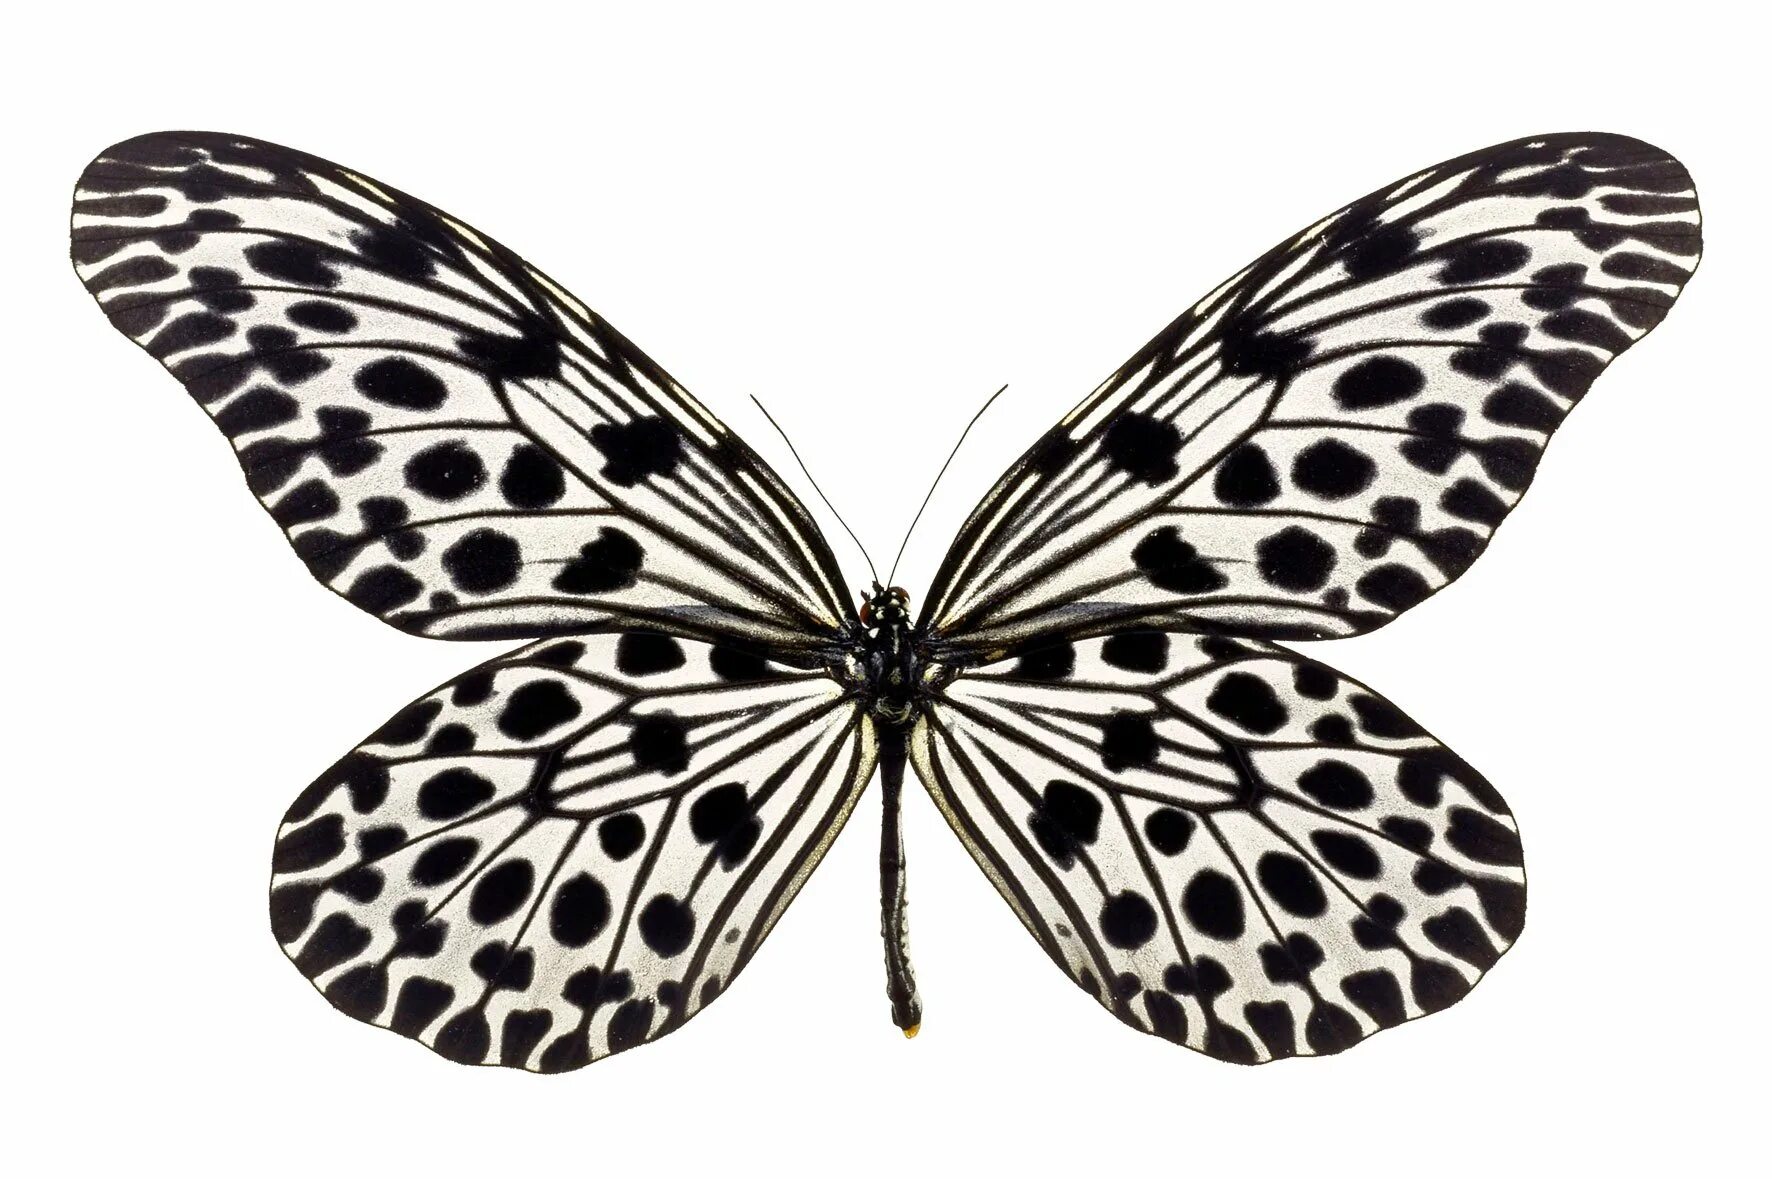 Картинки на белом фоне. Бабочка Монохромная. Черно белая бабочка на прозрачном фоне. Серые бабочки на белом фоне. Темные бабочки на белом фоне.